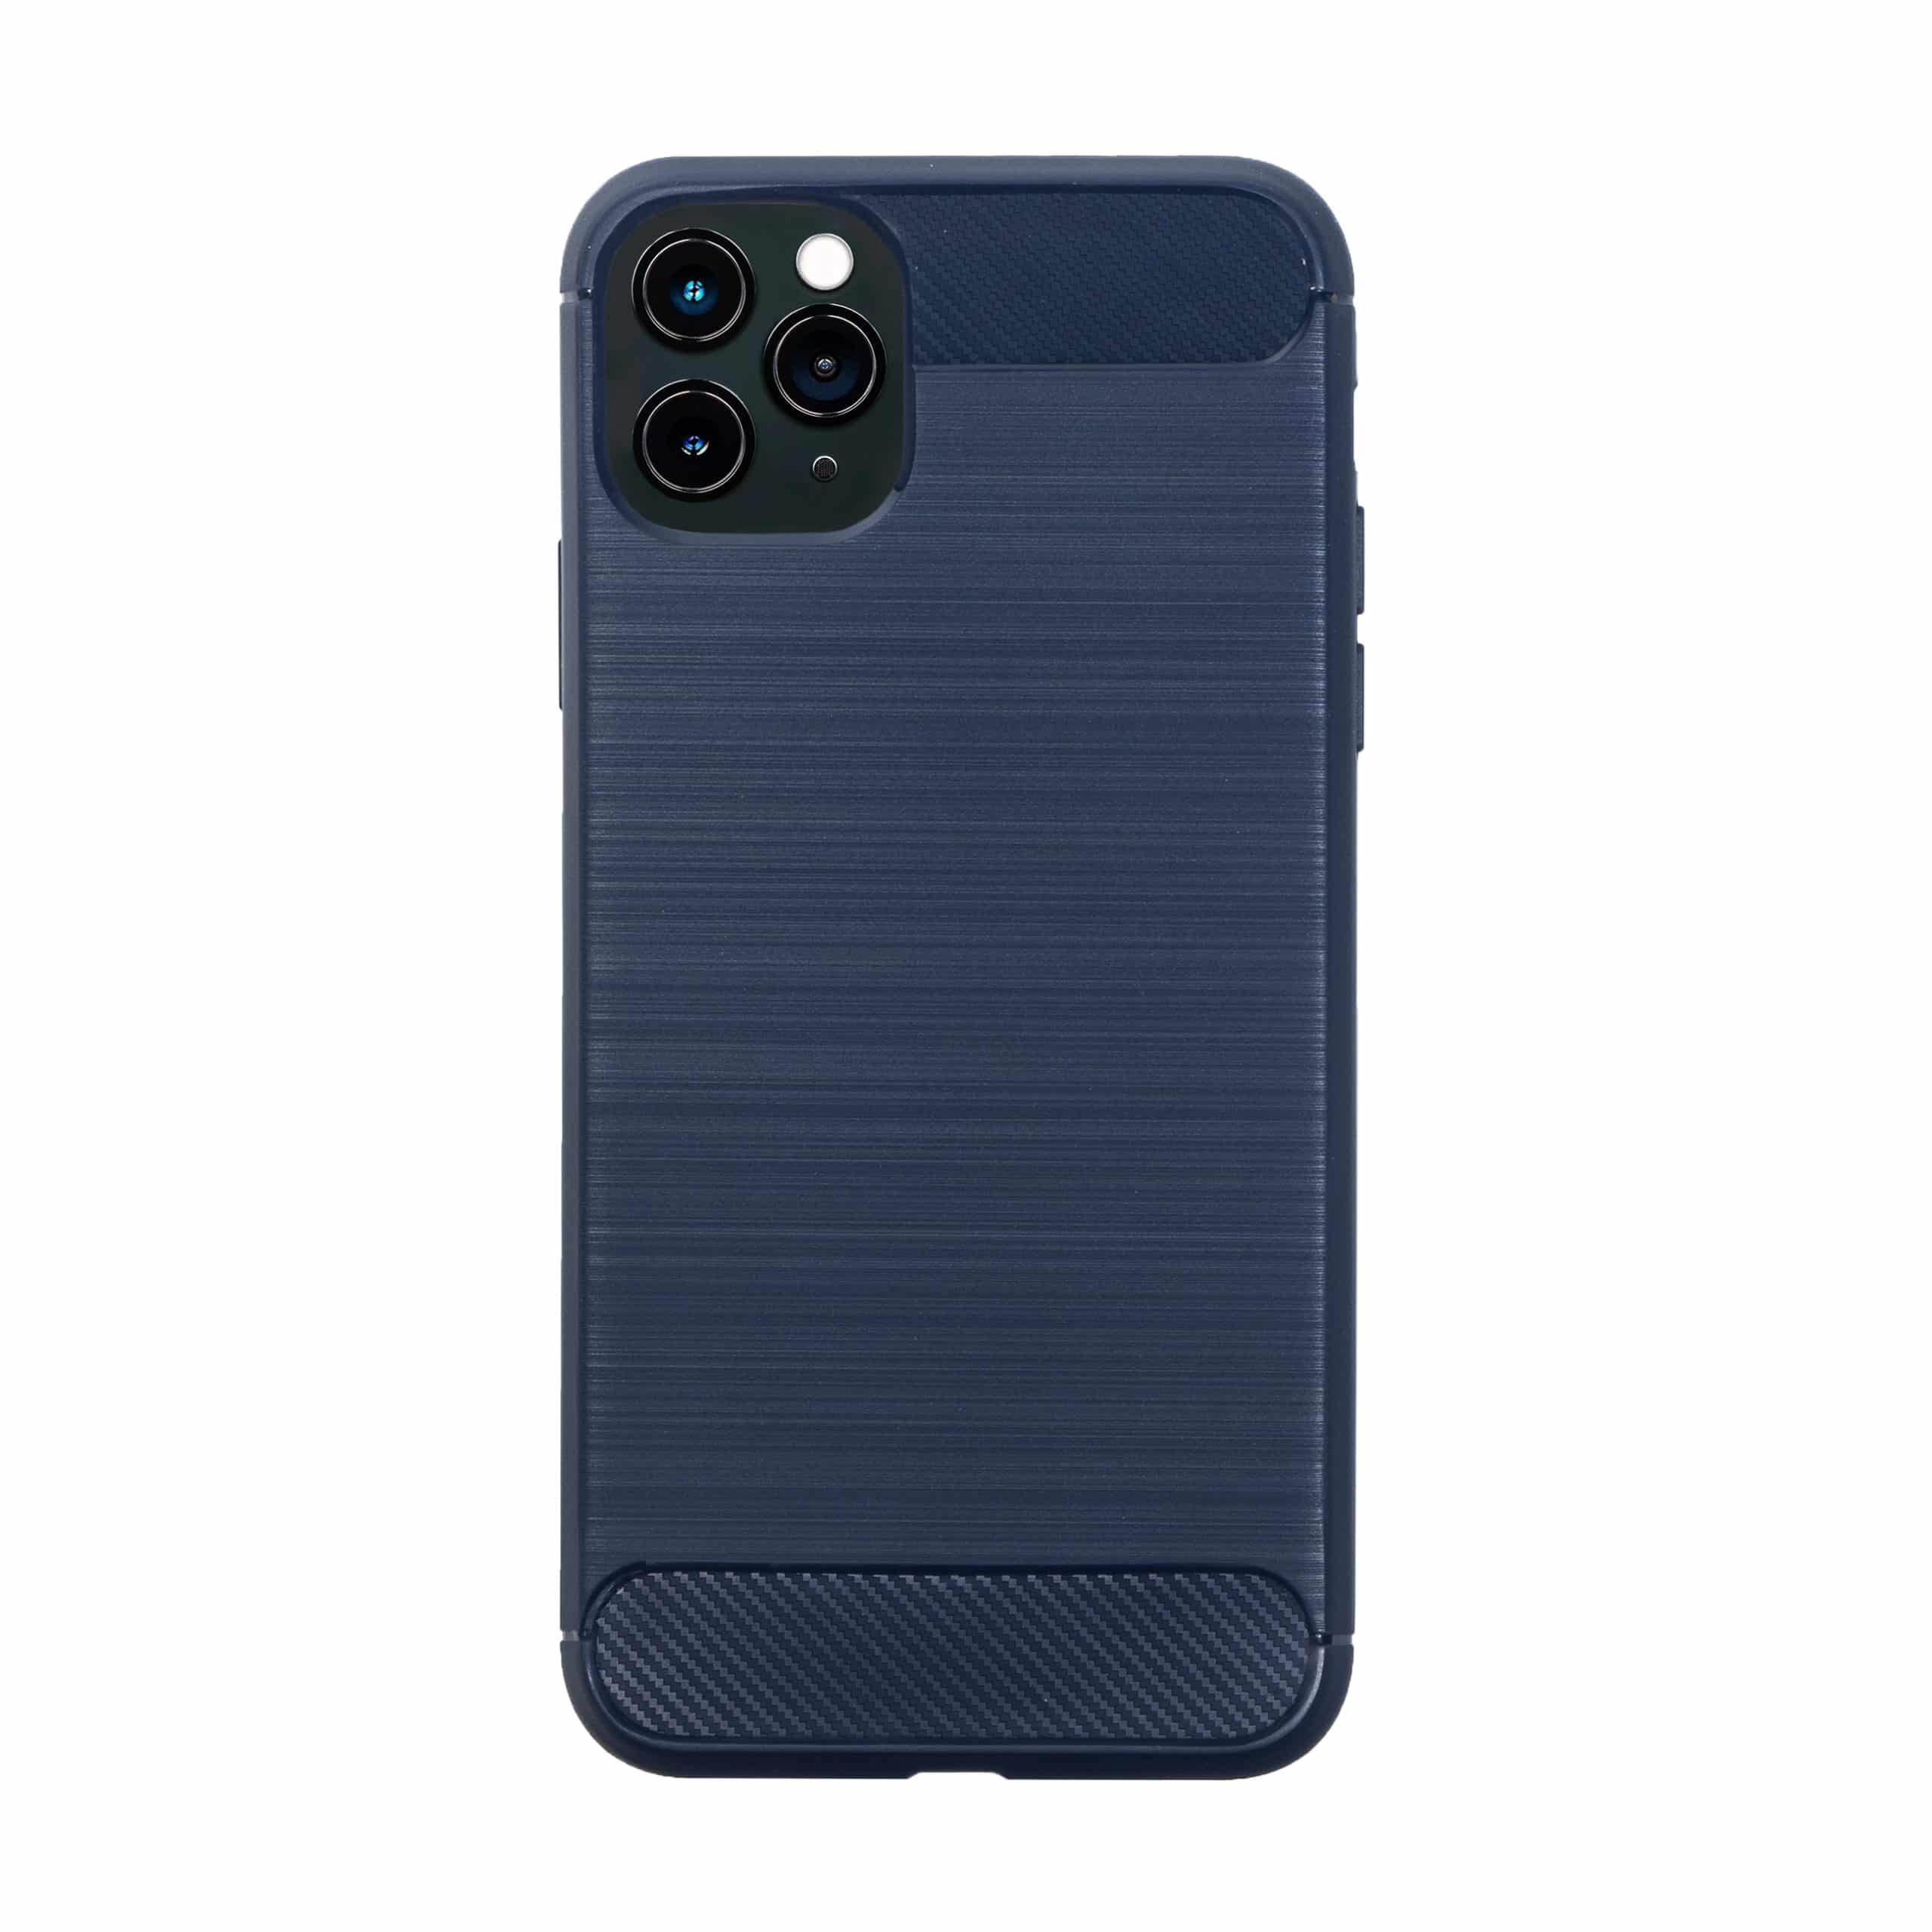 blauw carbon telefoonhoesje iPhone 11 Pro Max